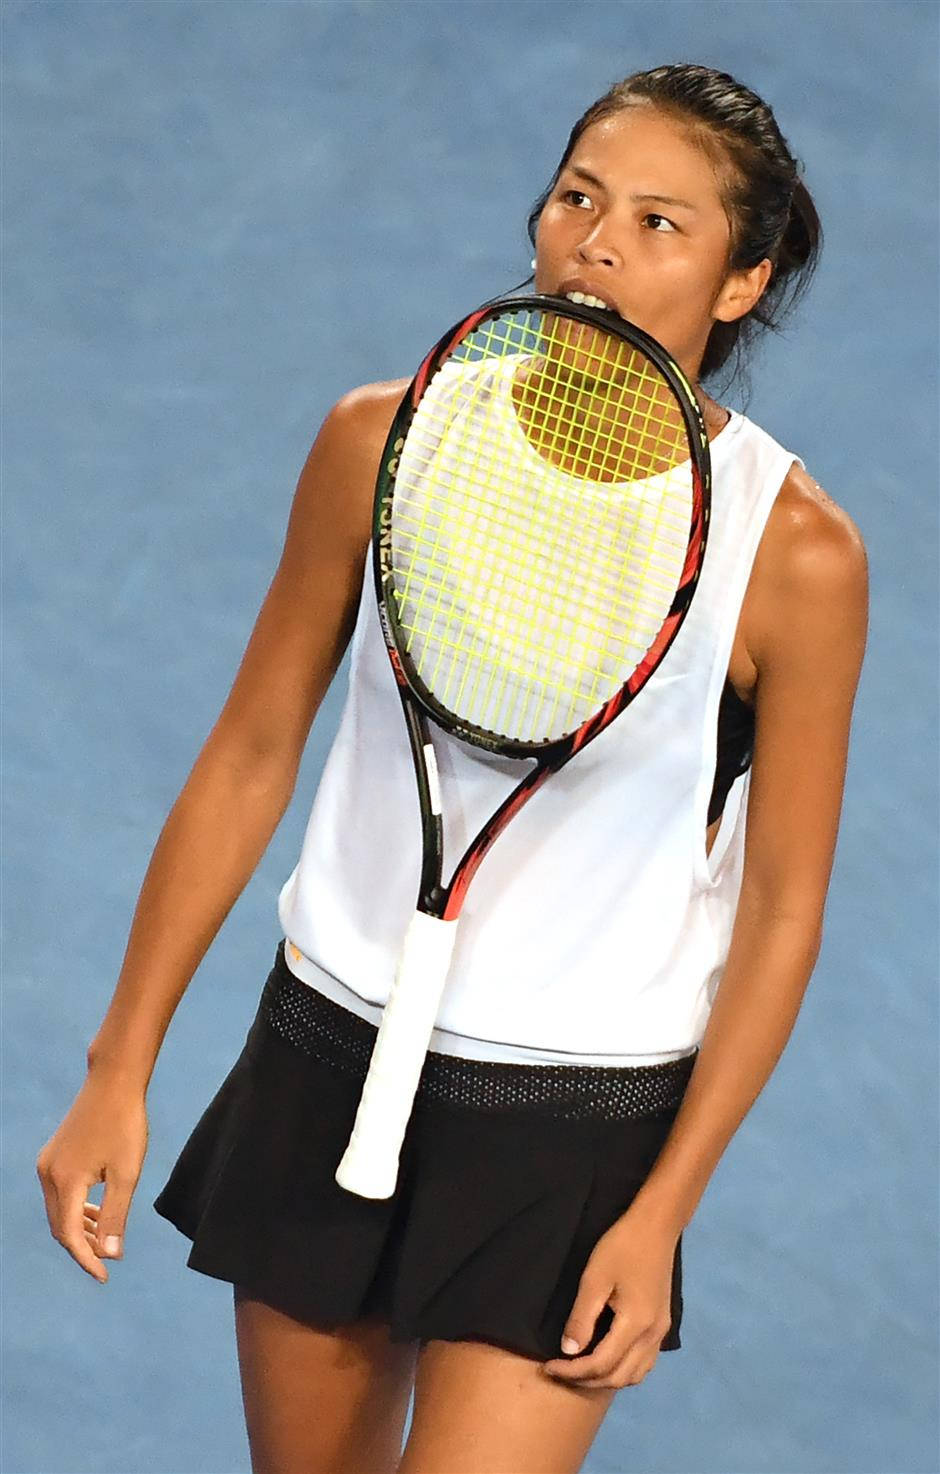 Su-wei Hsieh Biting Tennis Racket Wallpaper